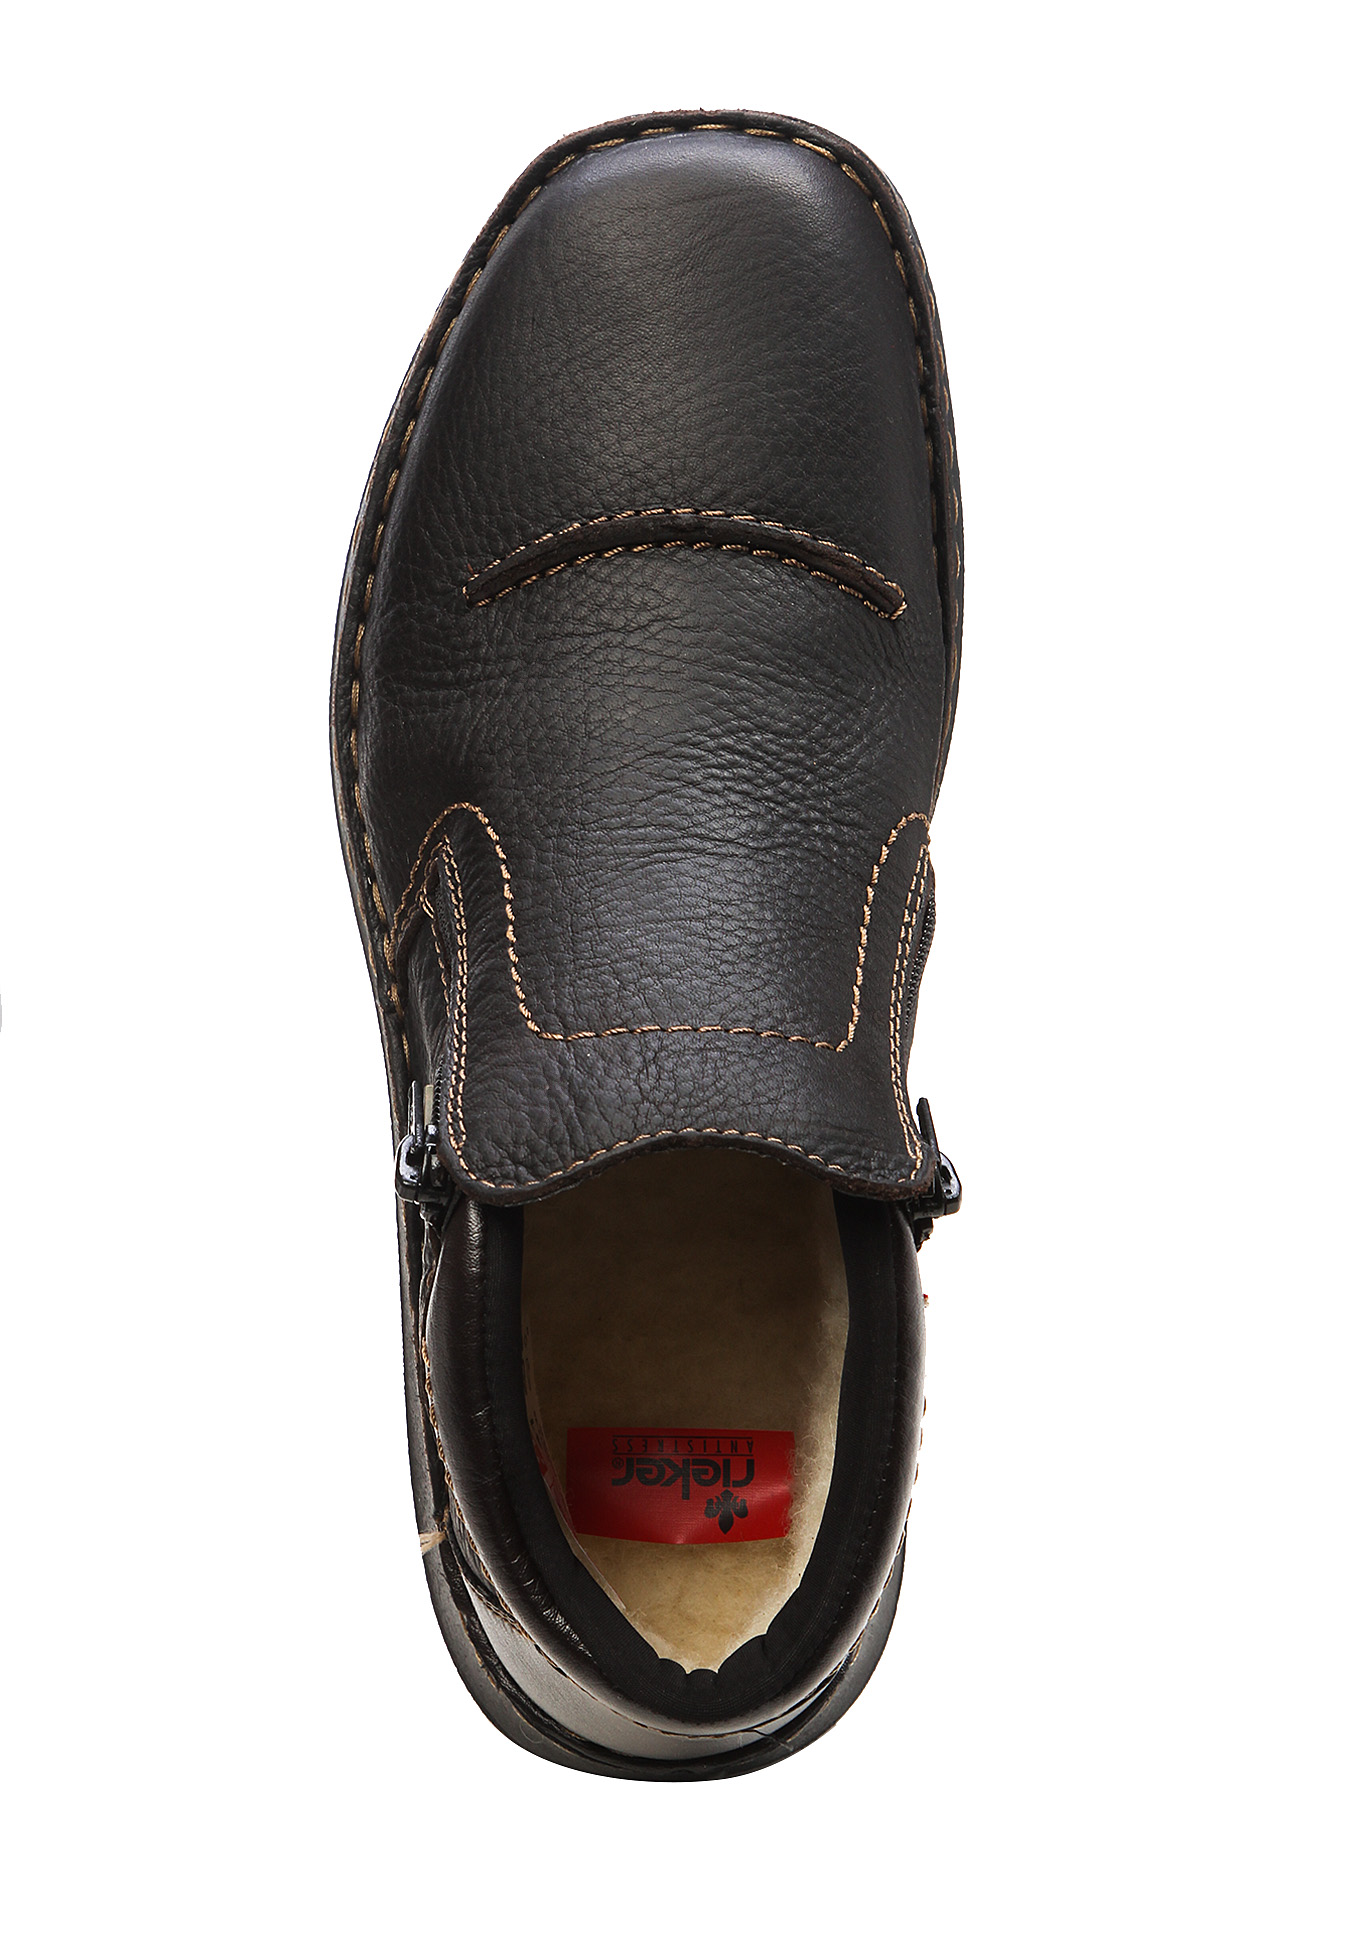 Ботинки мужские "Имин" Rieker, цвет коричневый, размер 40 - фото 4